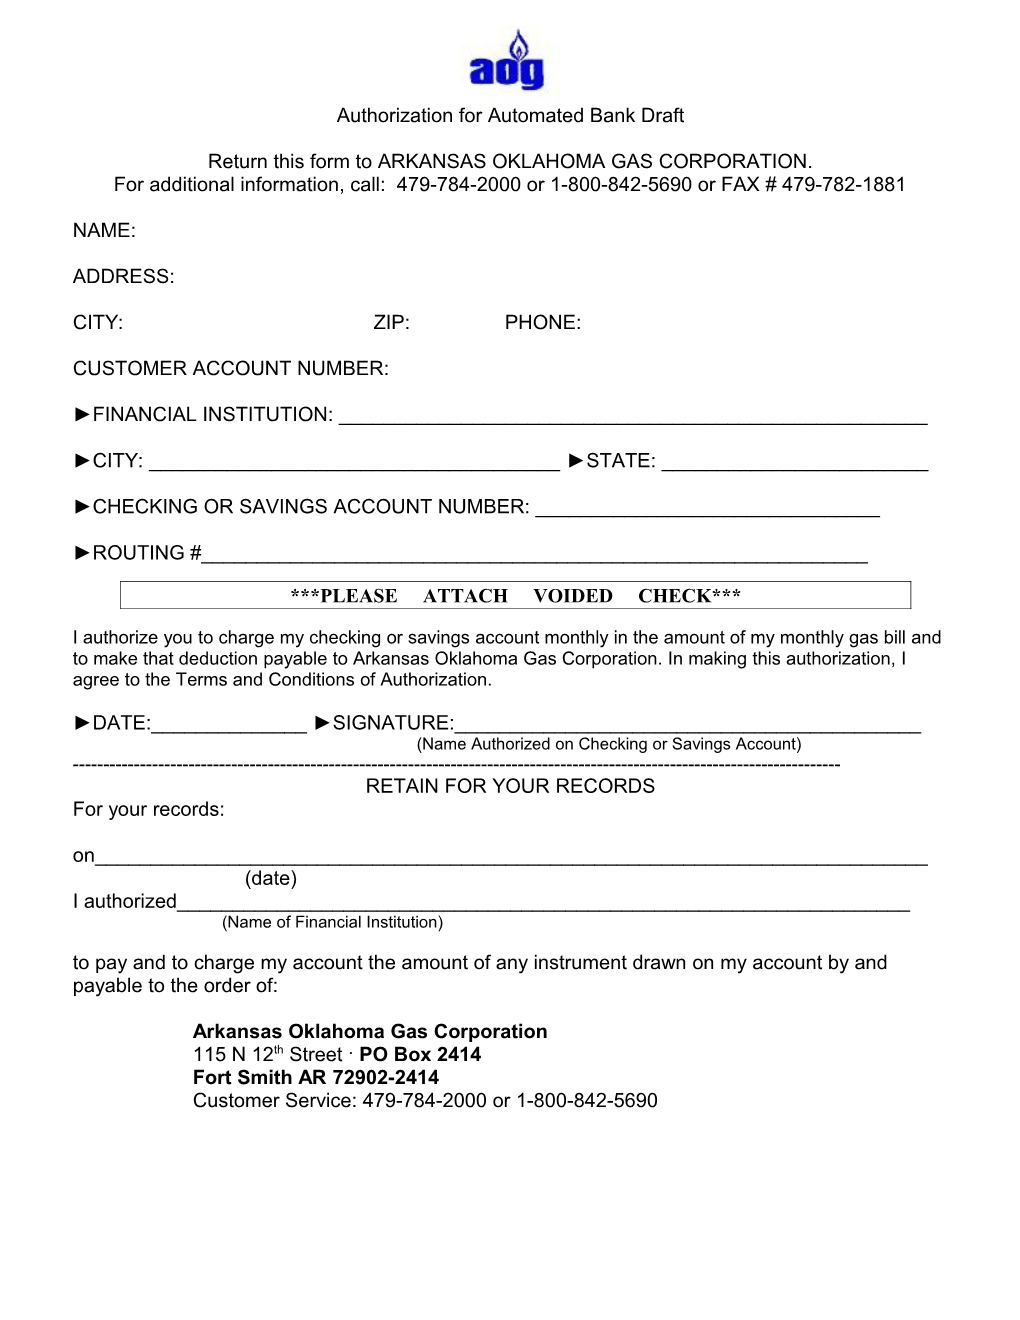 Return This Form to ARKANSAS OKLAHOMA GAS CORPORATION